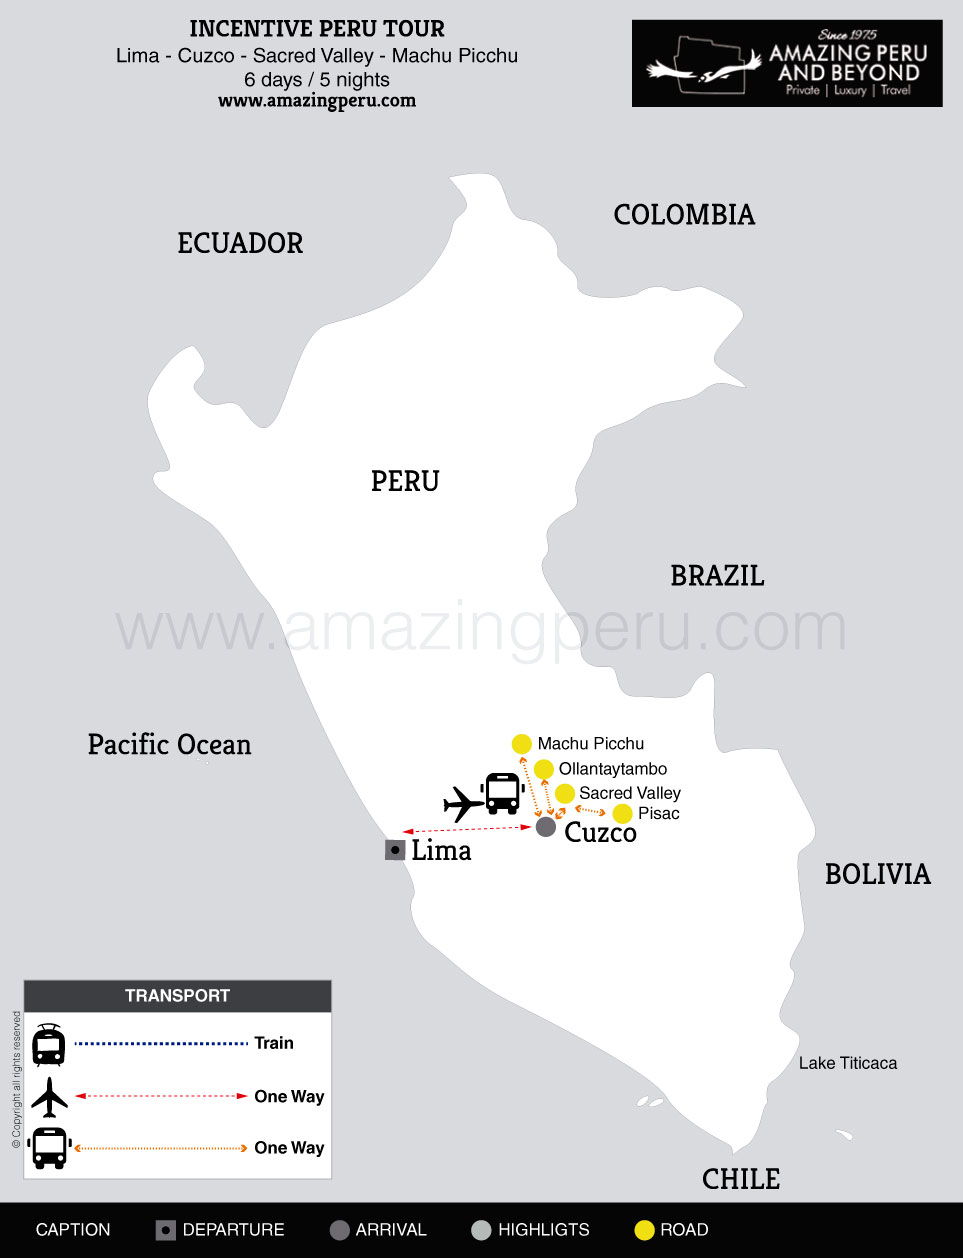 2023 Incentive Peru Tour - 6 days - 6 days / 5 nights.